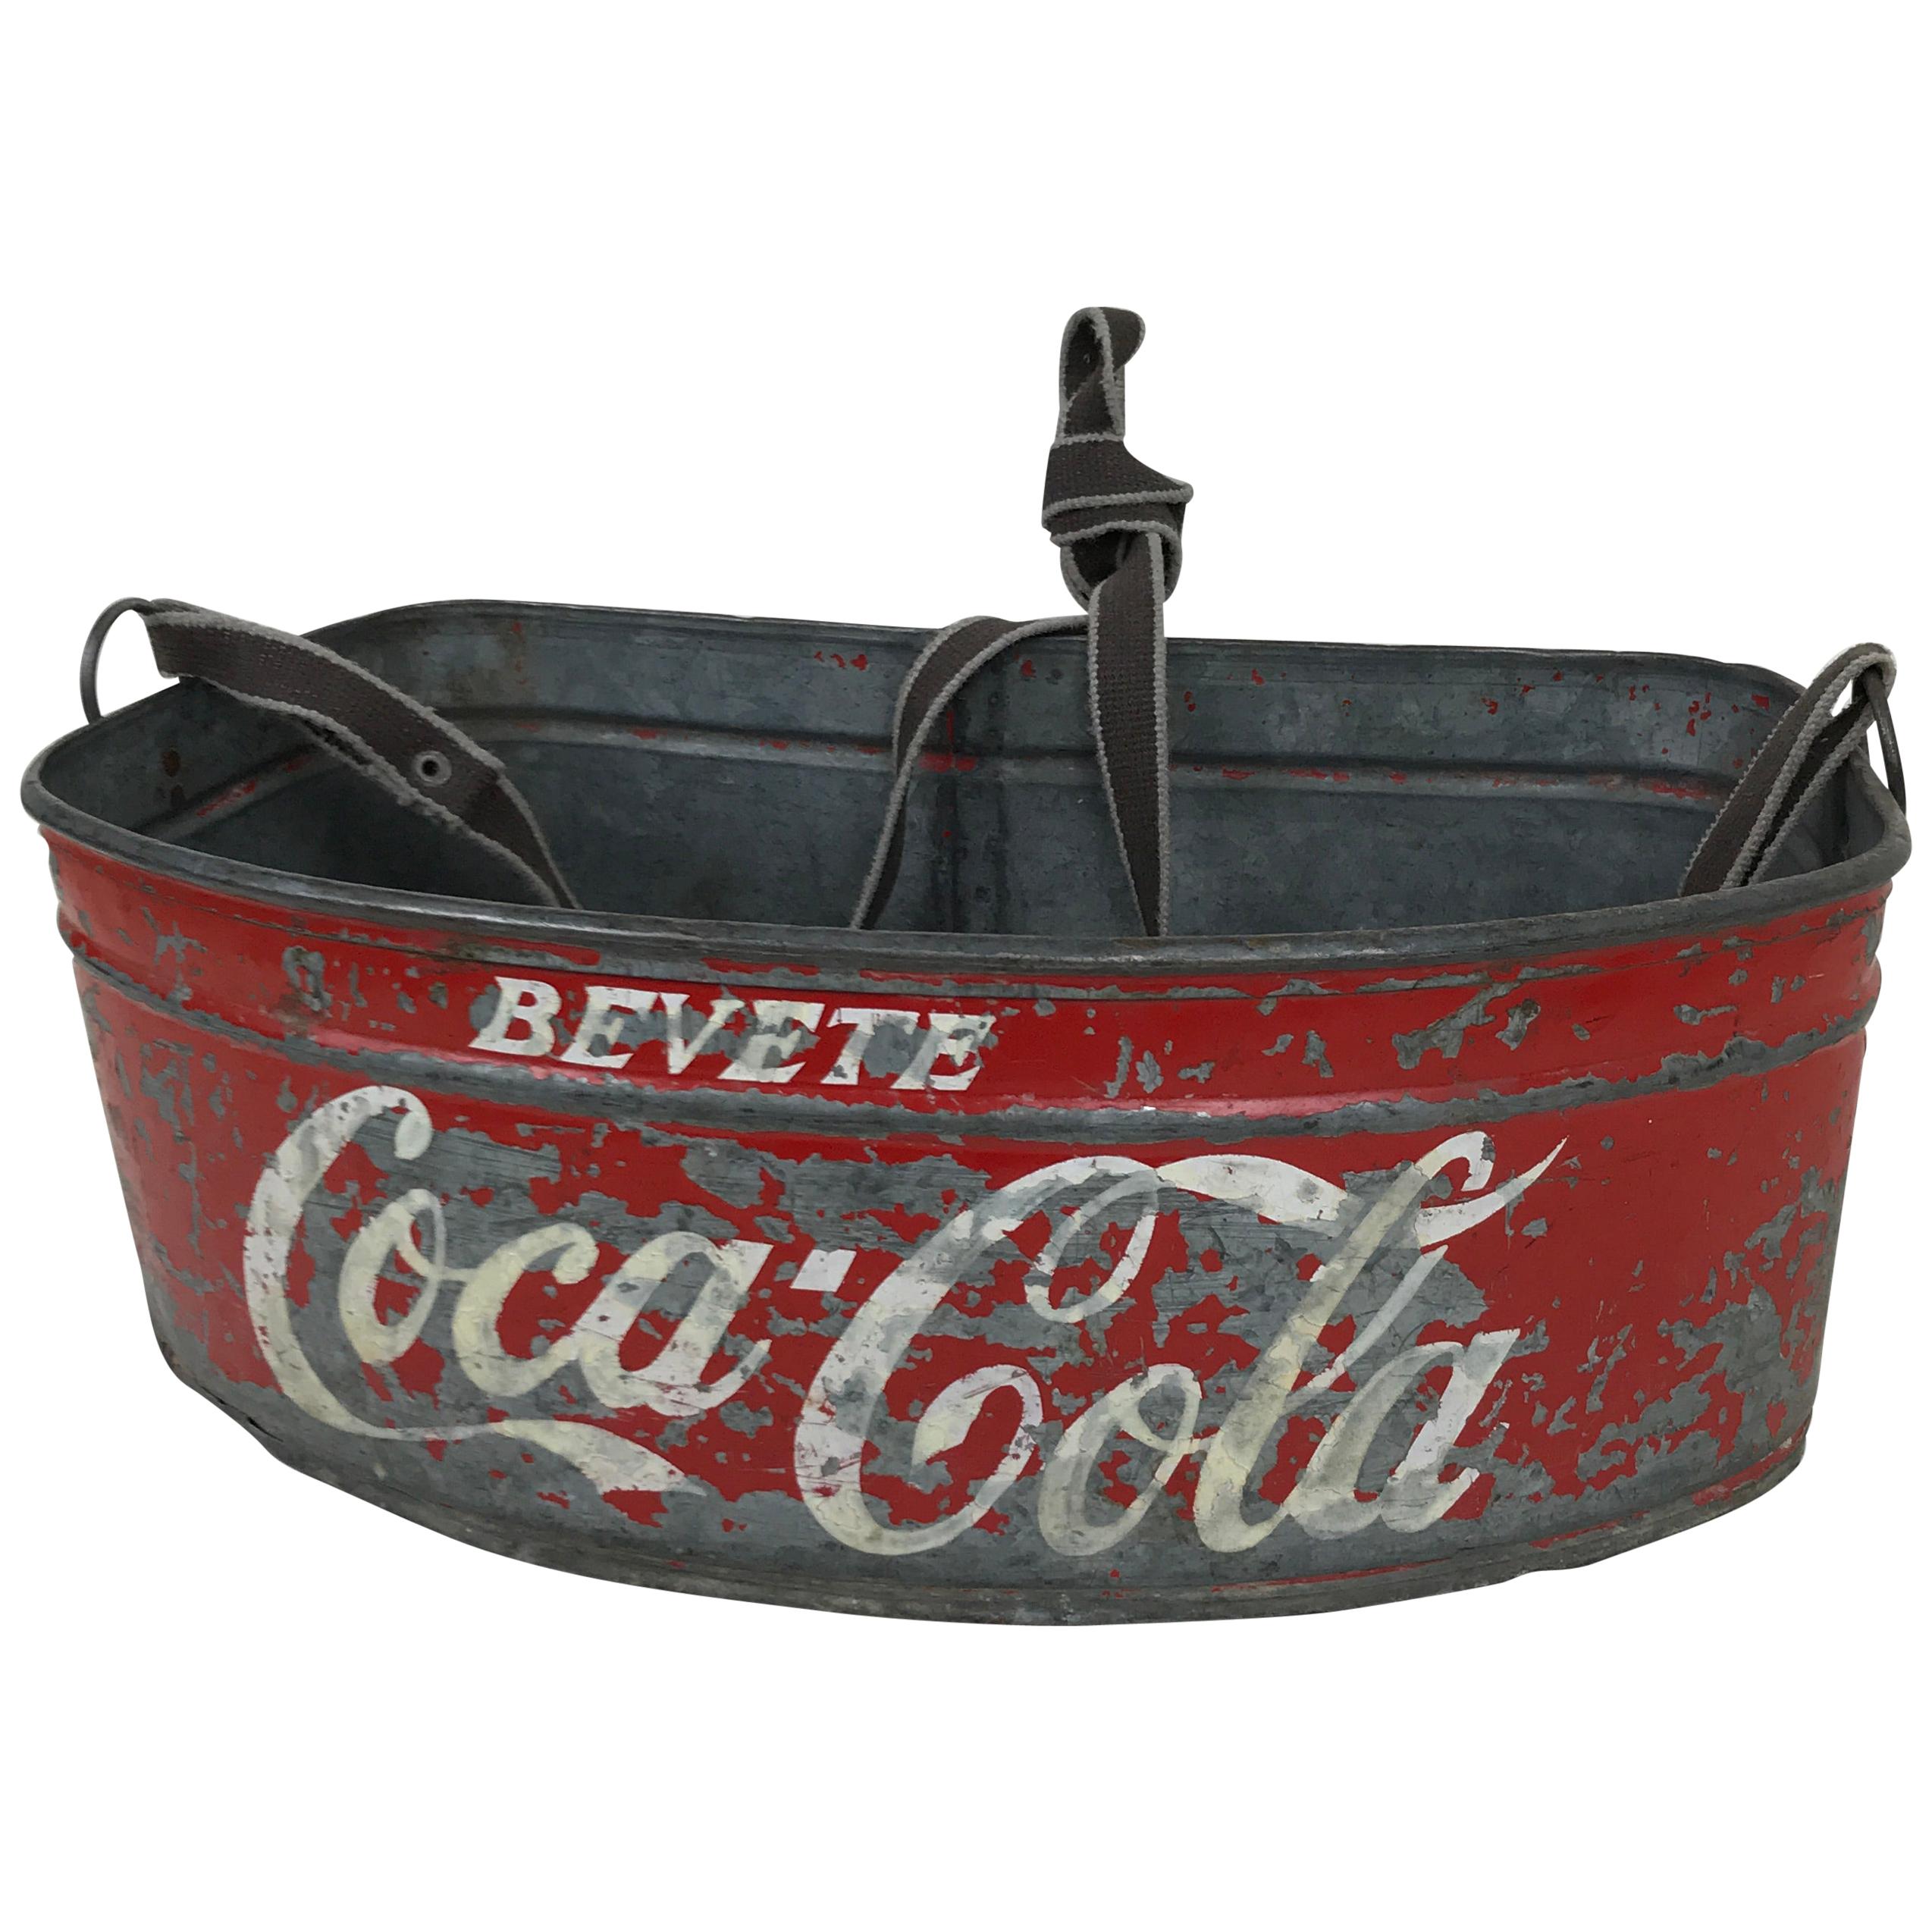 1960s Italian Vintage Advertising Metal Drink Coca-Cola Stadium Cooler For Sale